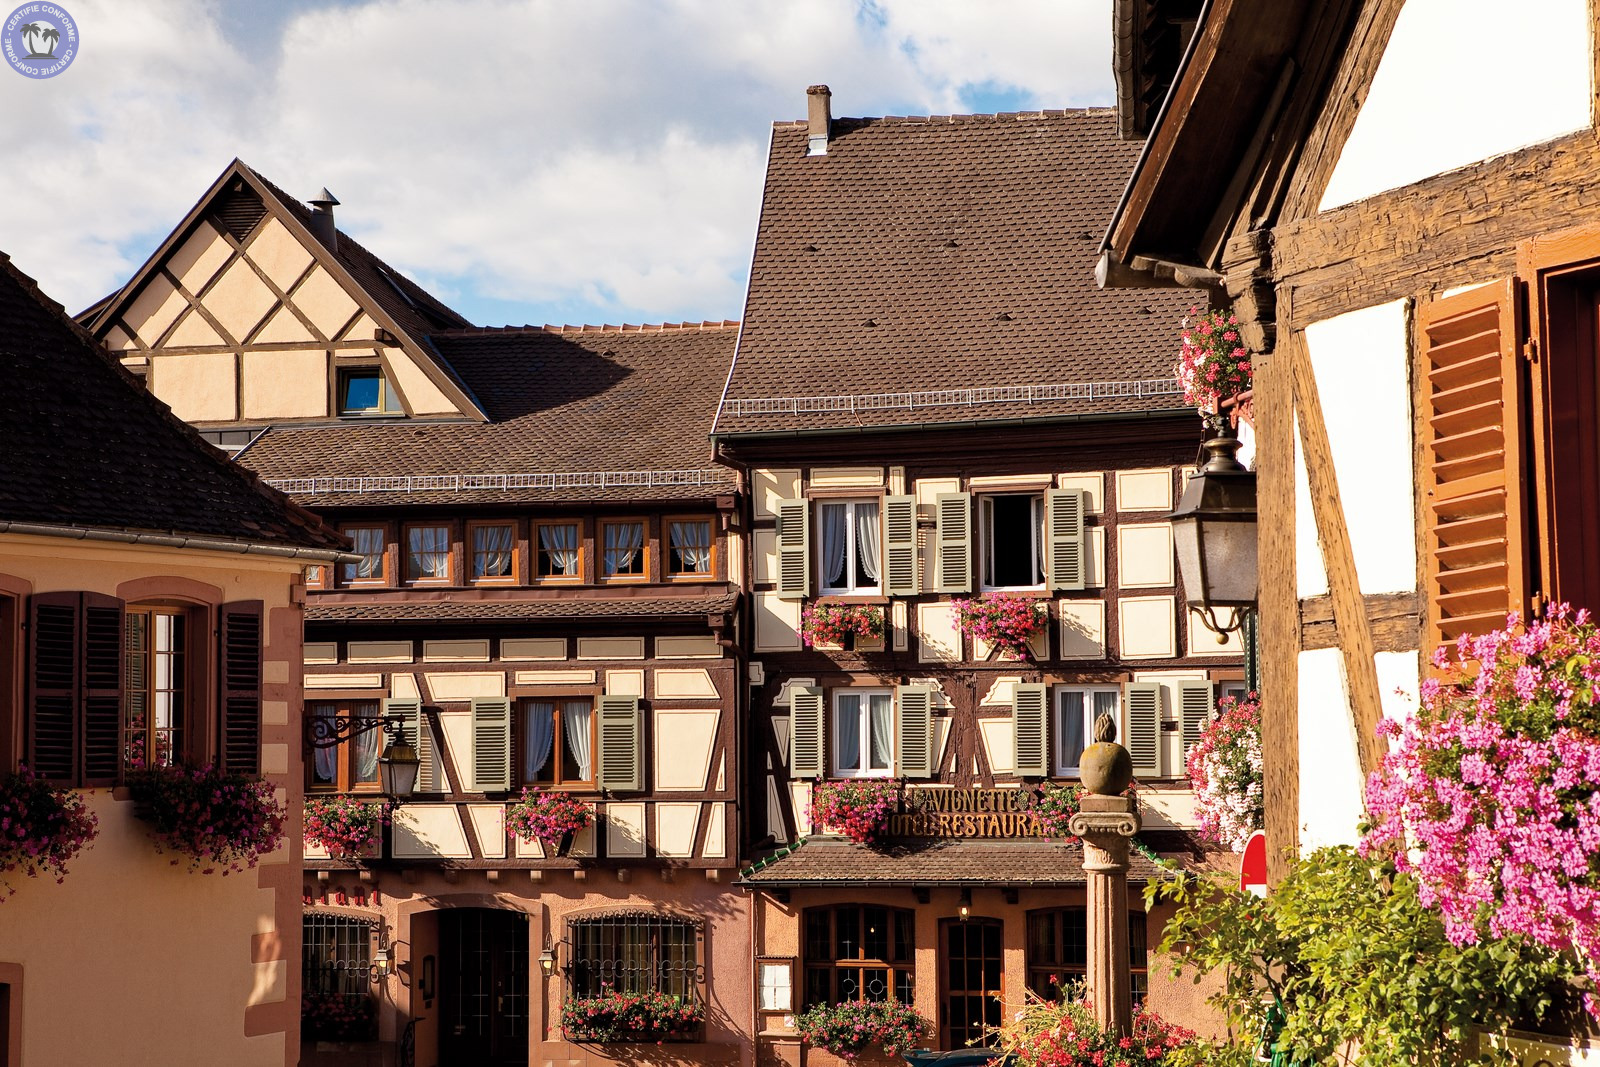 Hotellerie-Grand-Est-Haut-Rhin-Escapade-en-Alsace462532333658596670.jpg